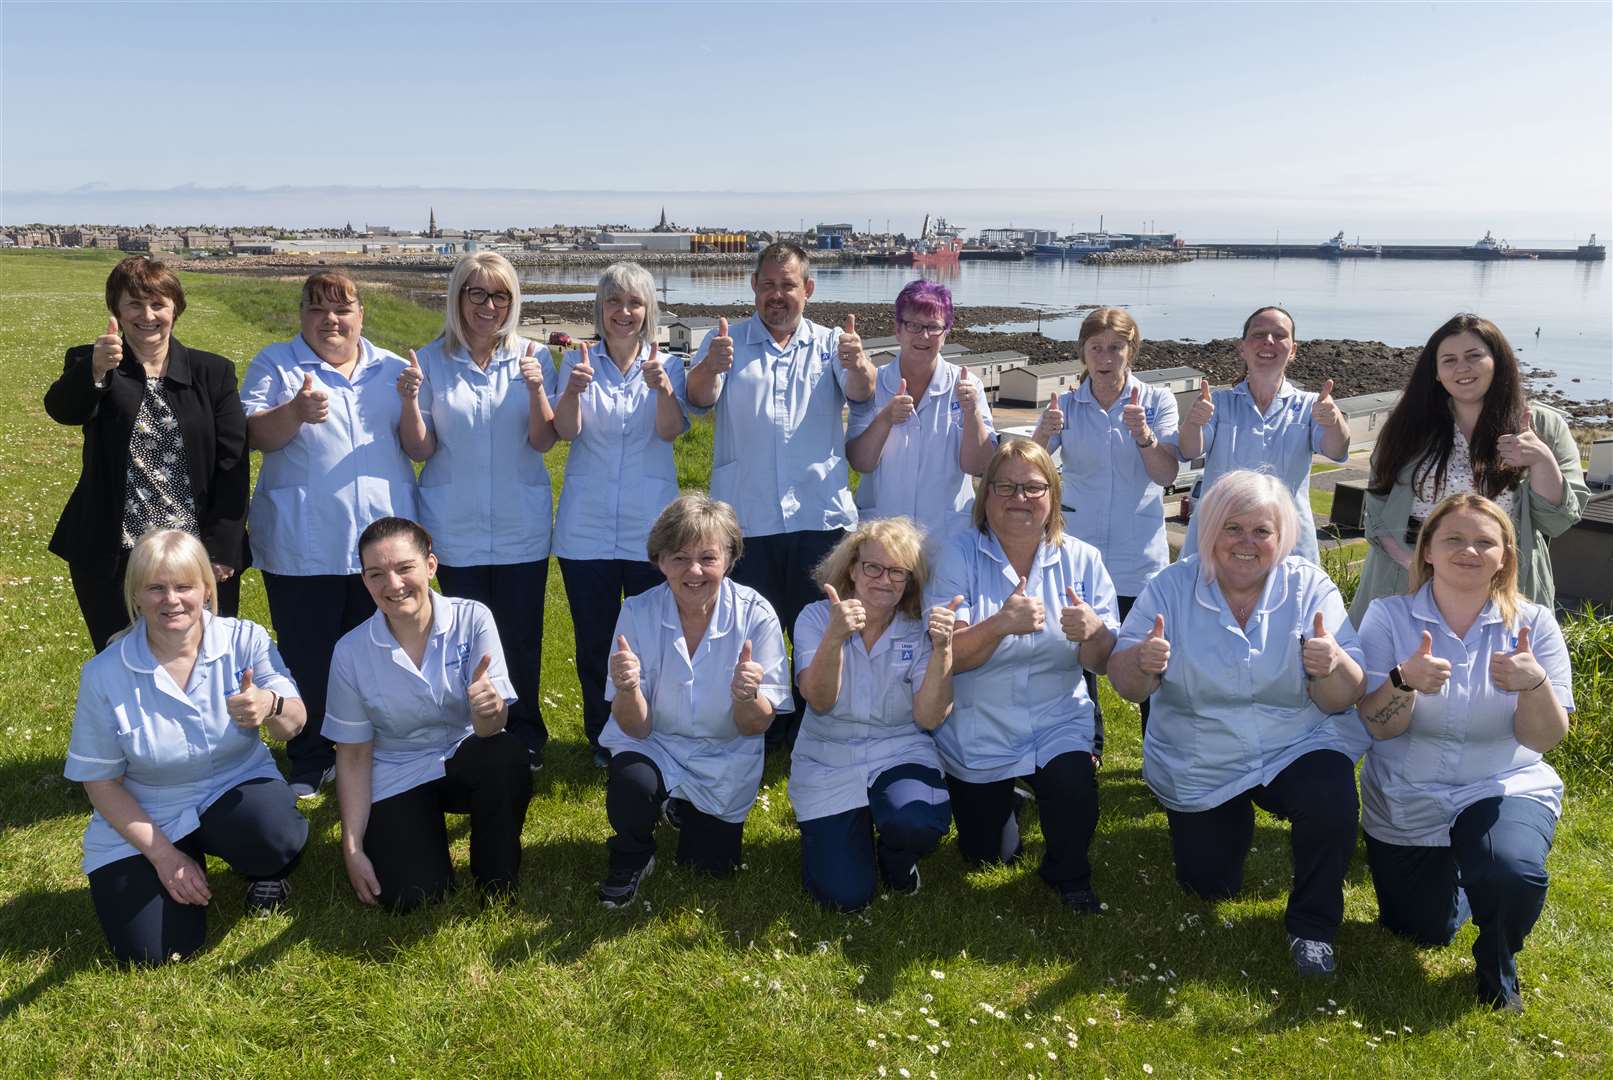 North Aberdeenshire Care team were praised for their efforts.